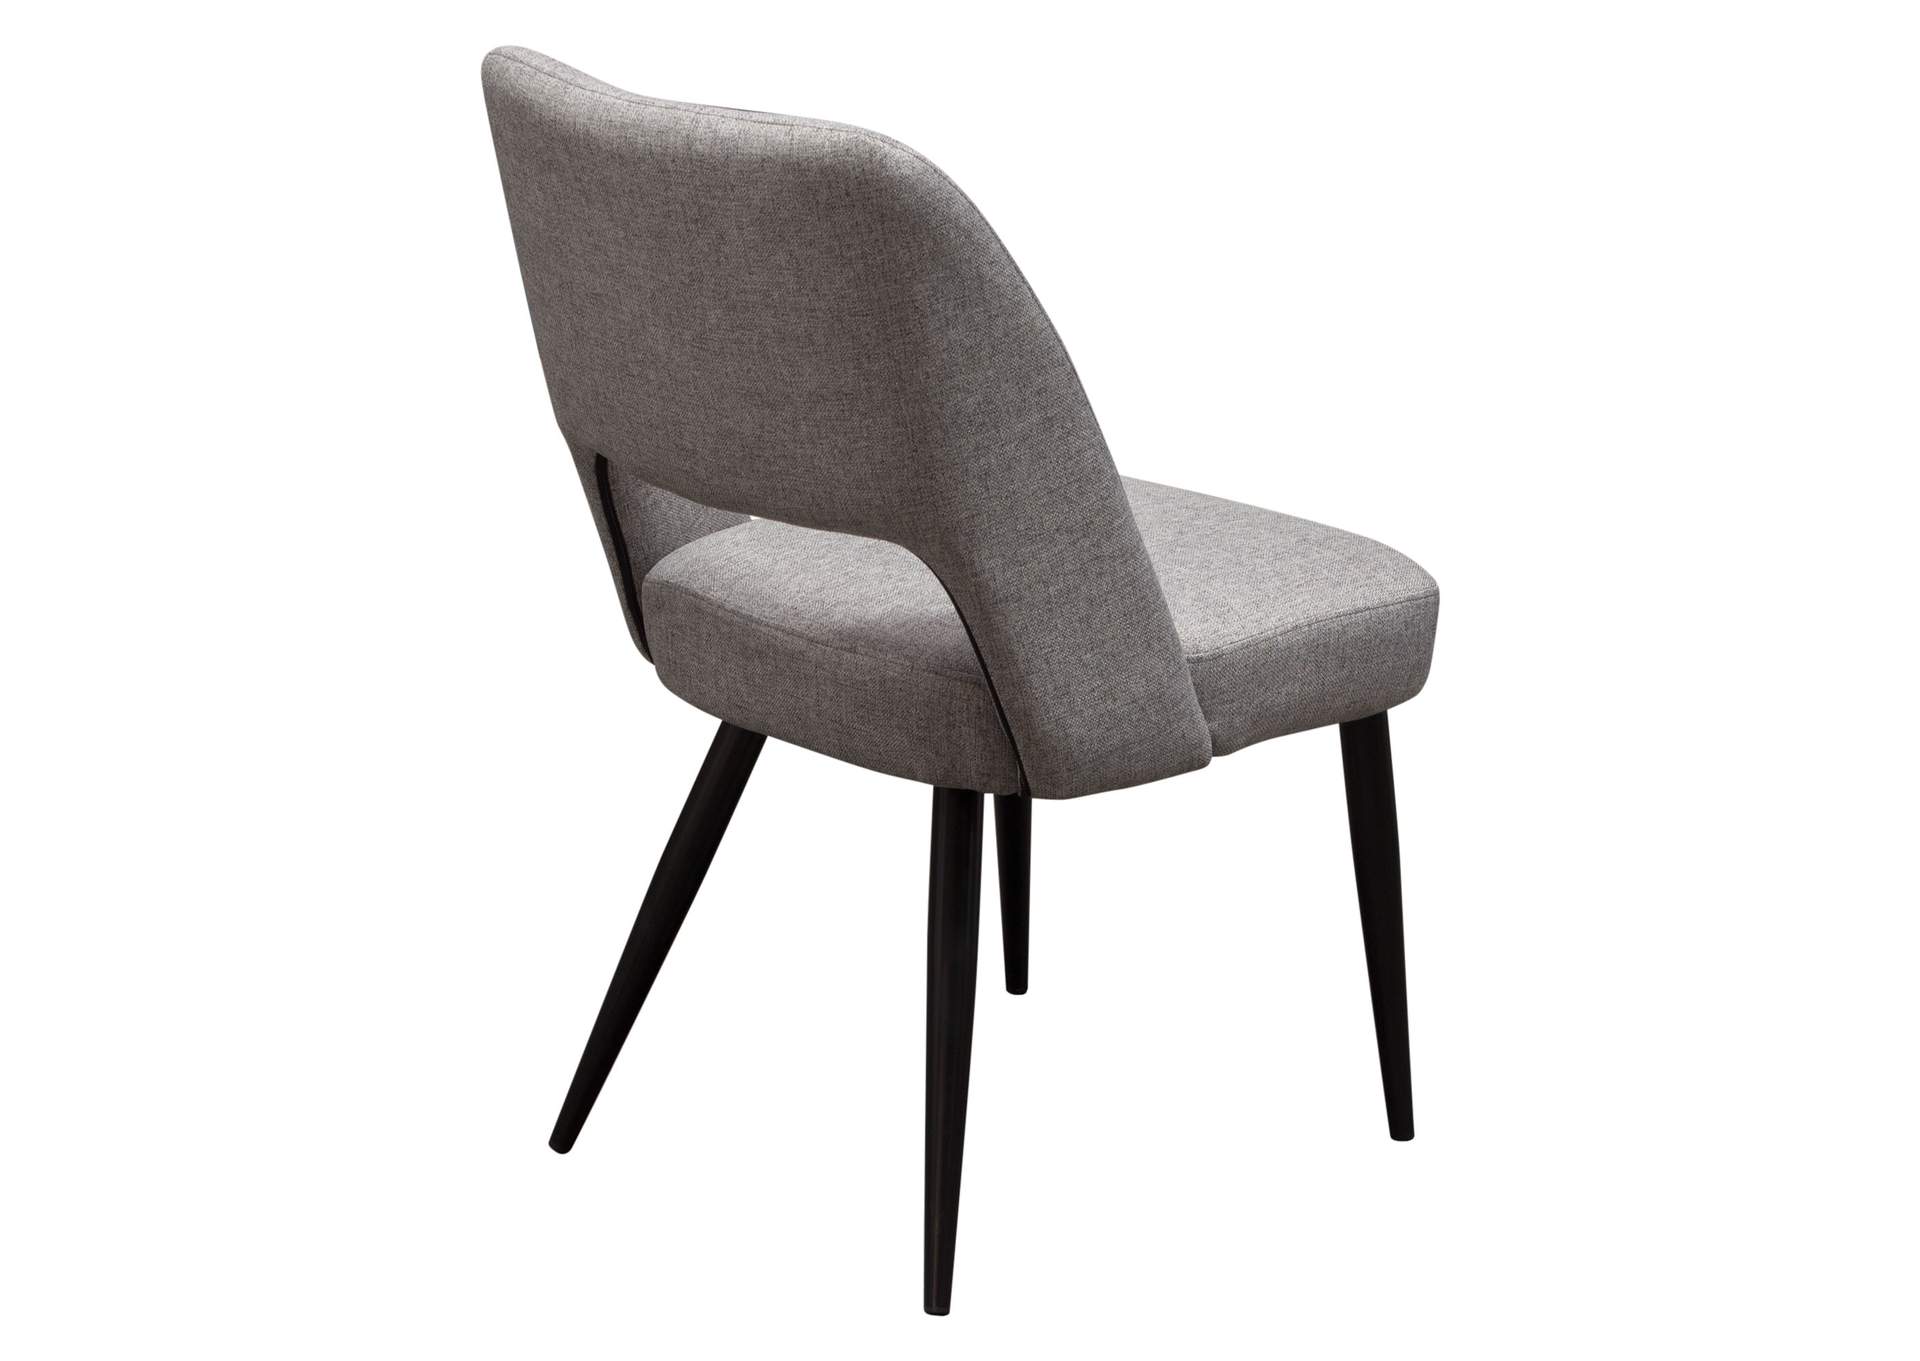 Set of (2) Reveal Dining Chairs in Grey Fabric w/ Black Powder Coat Metal Leg by Diamond Sofa,Diamond Sofa